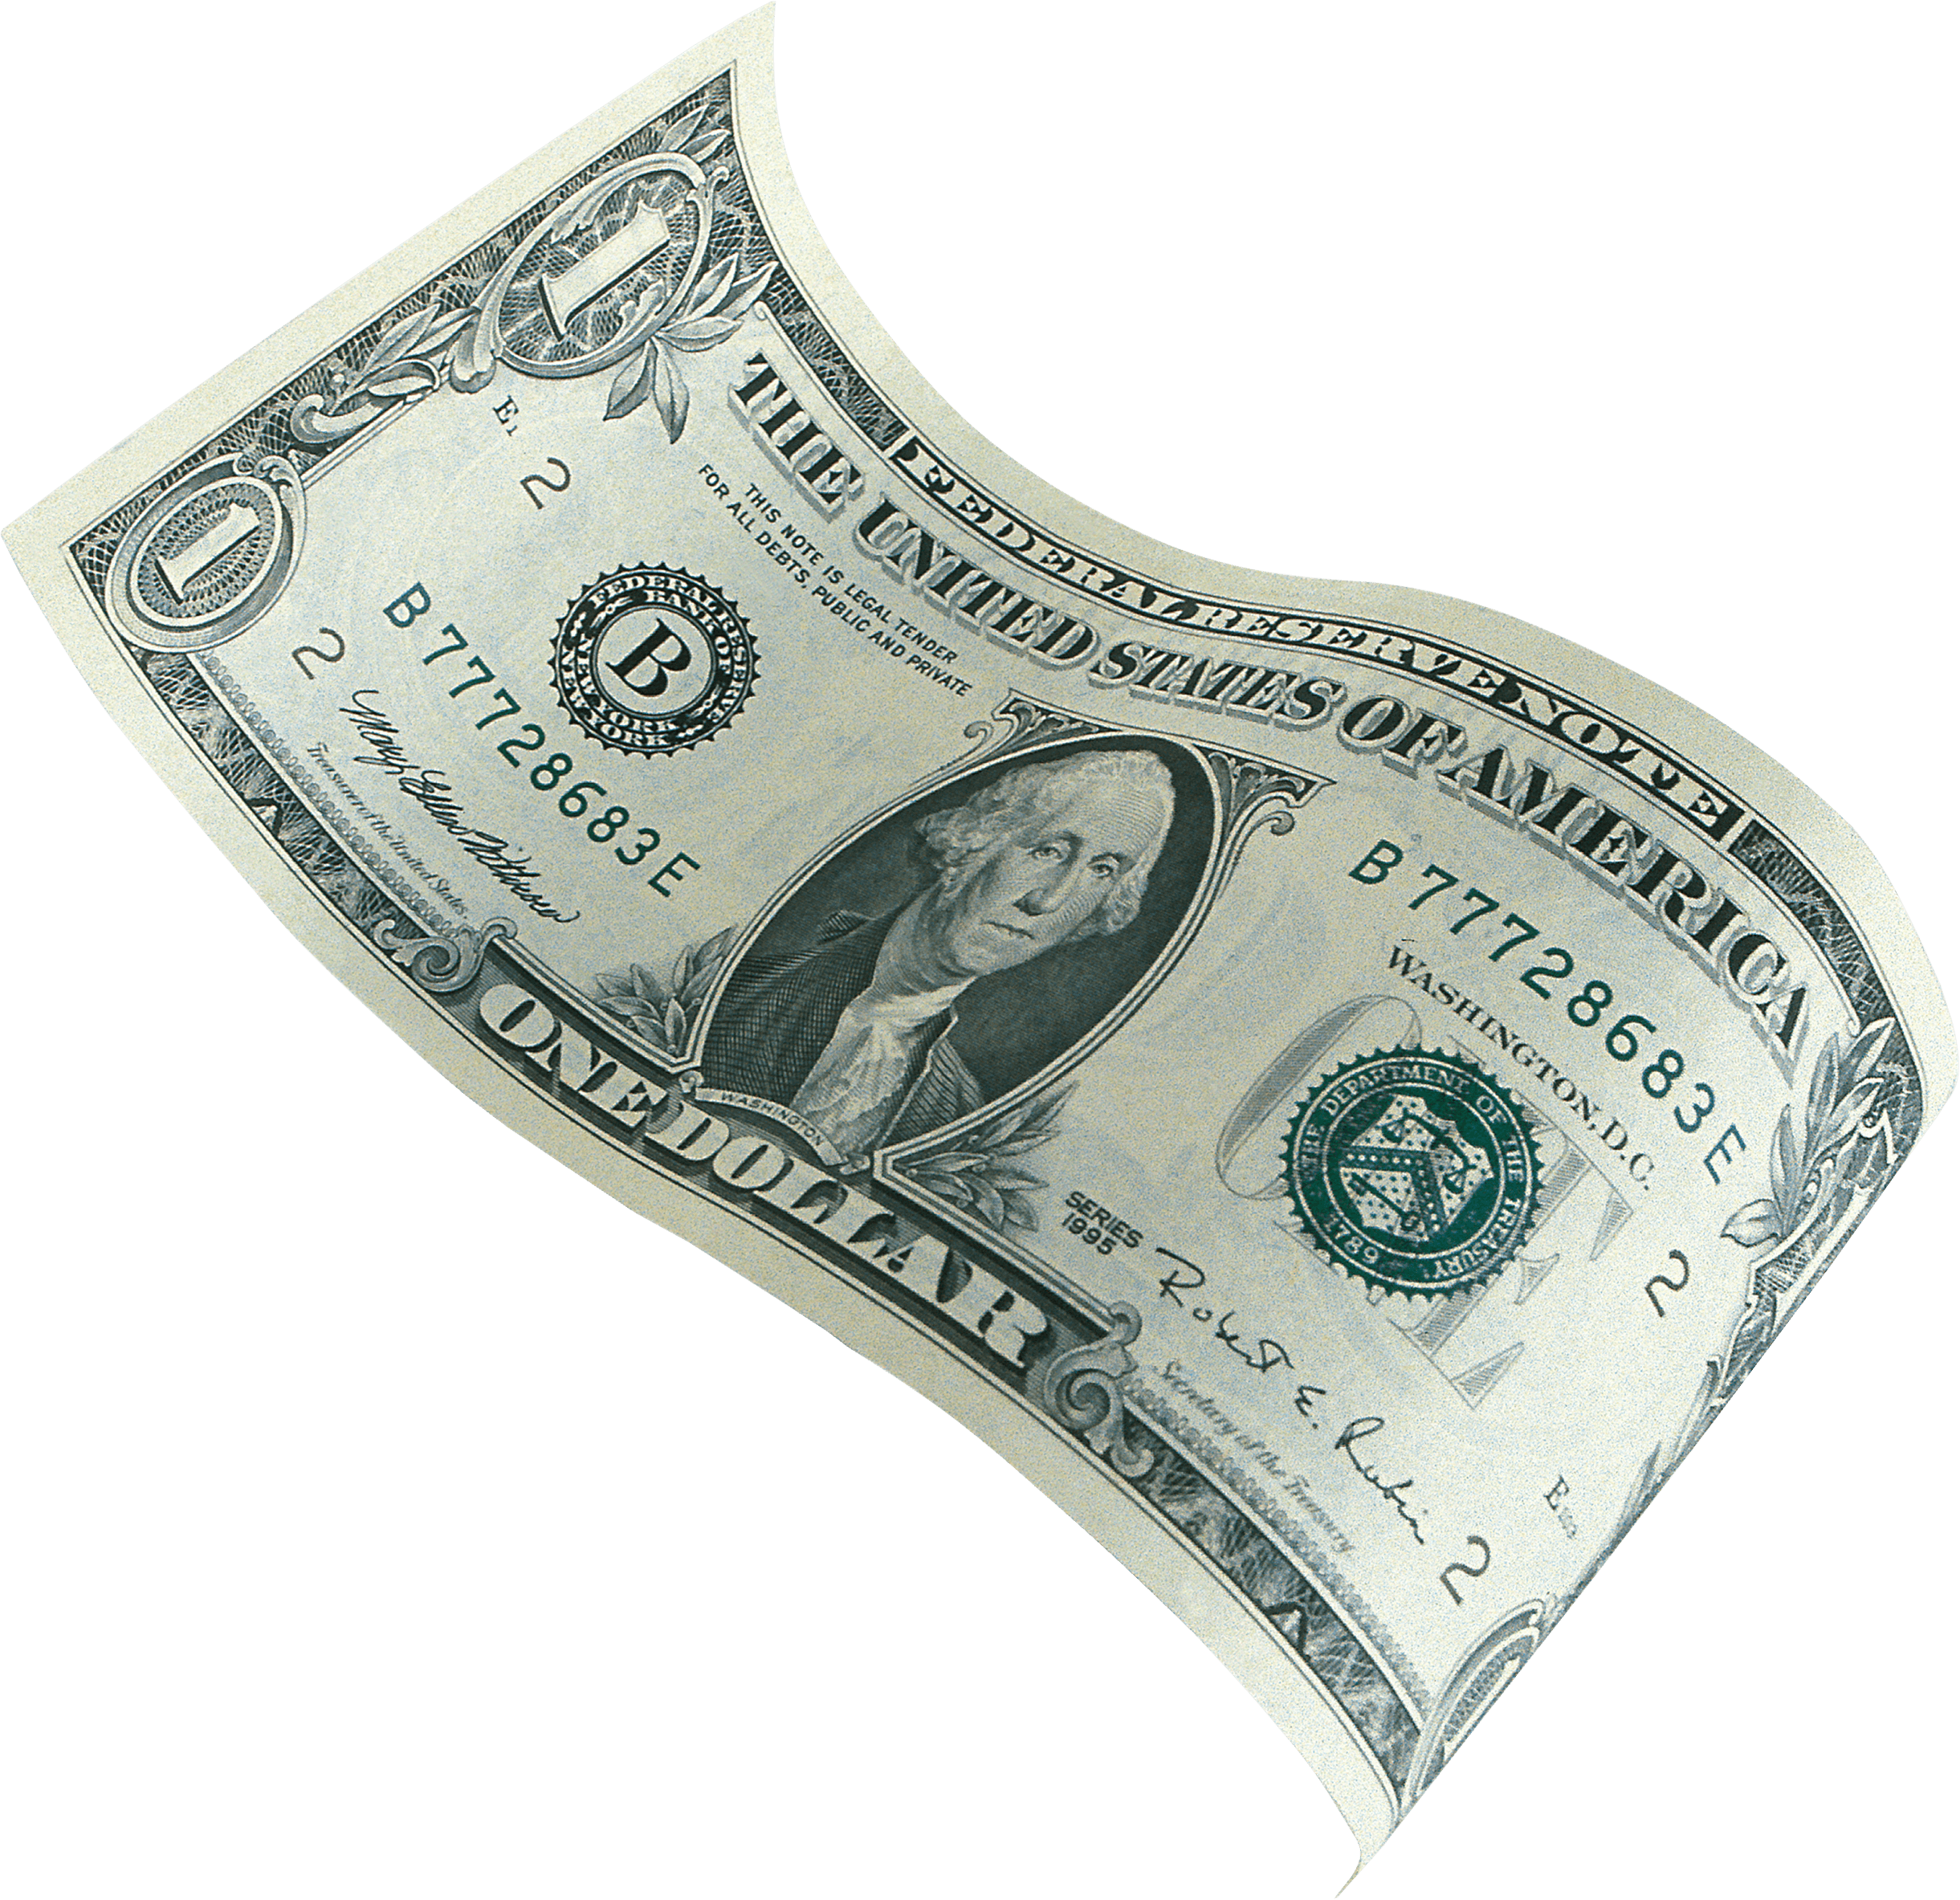 United States Dollar Bill PNG Free Image